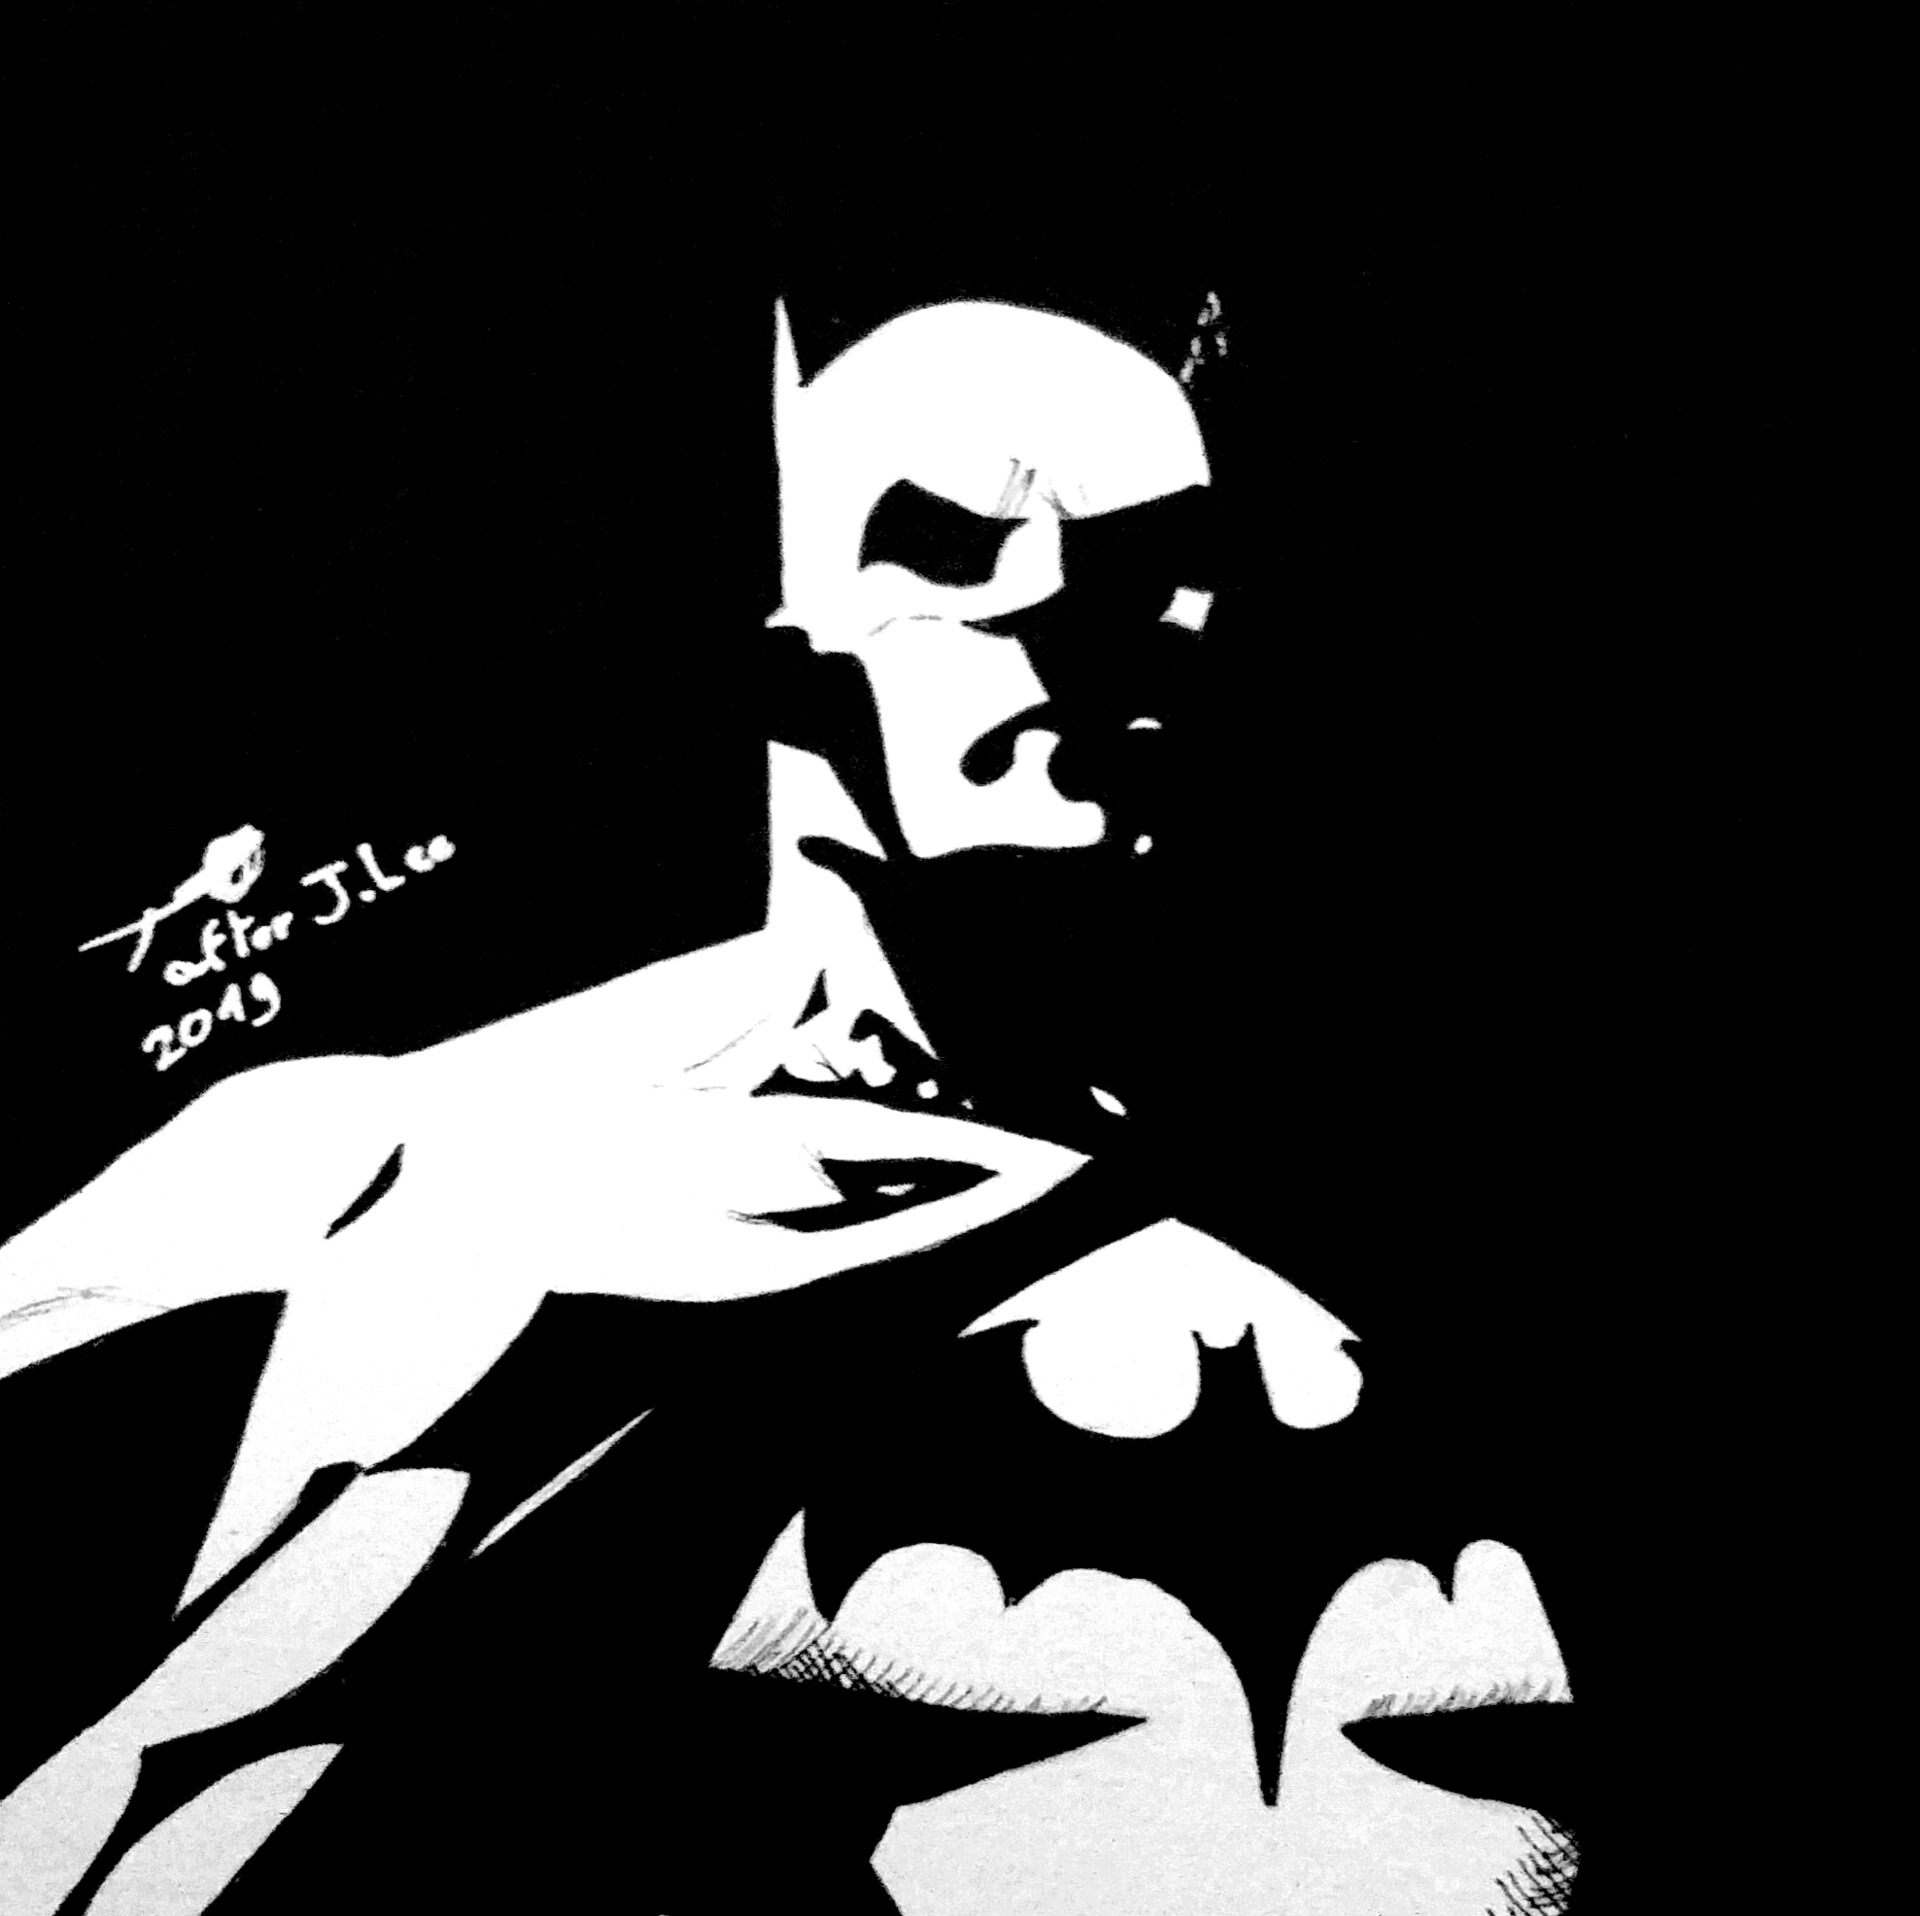 ArtStation - Batman - Black and White